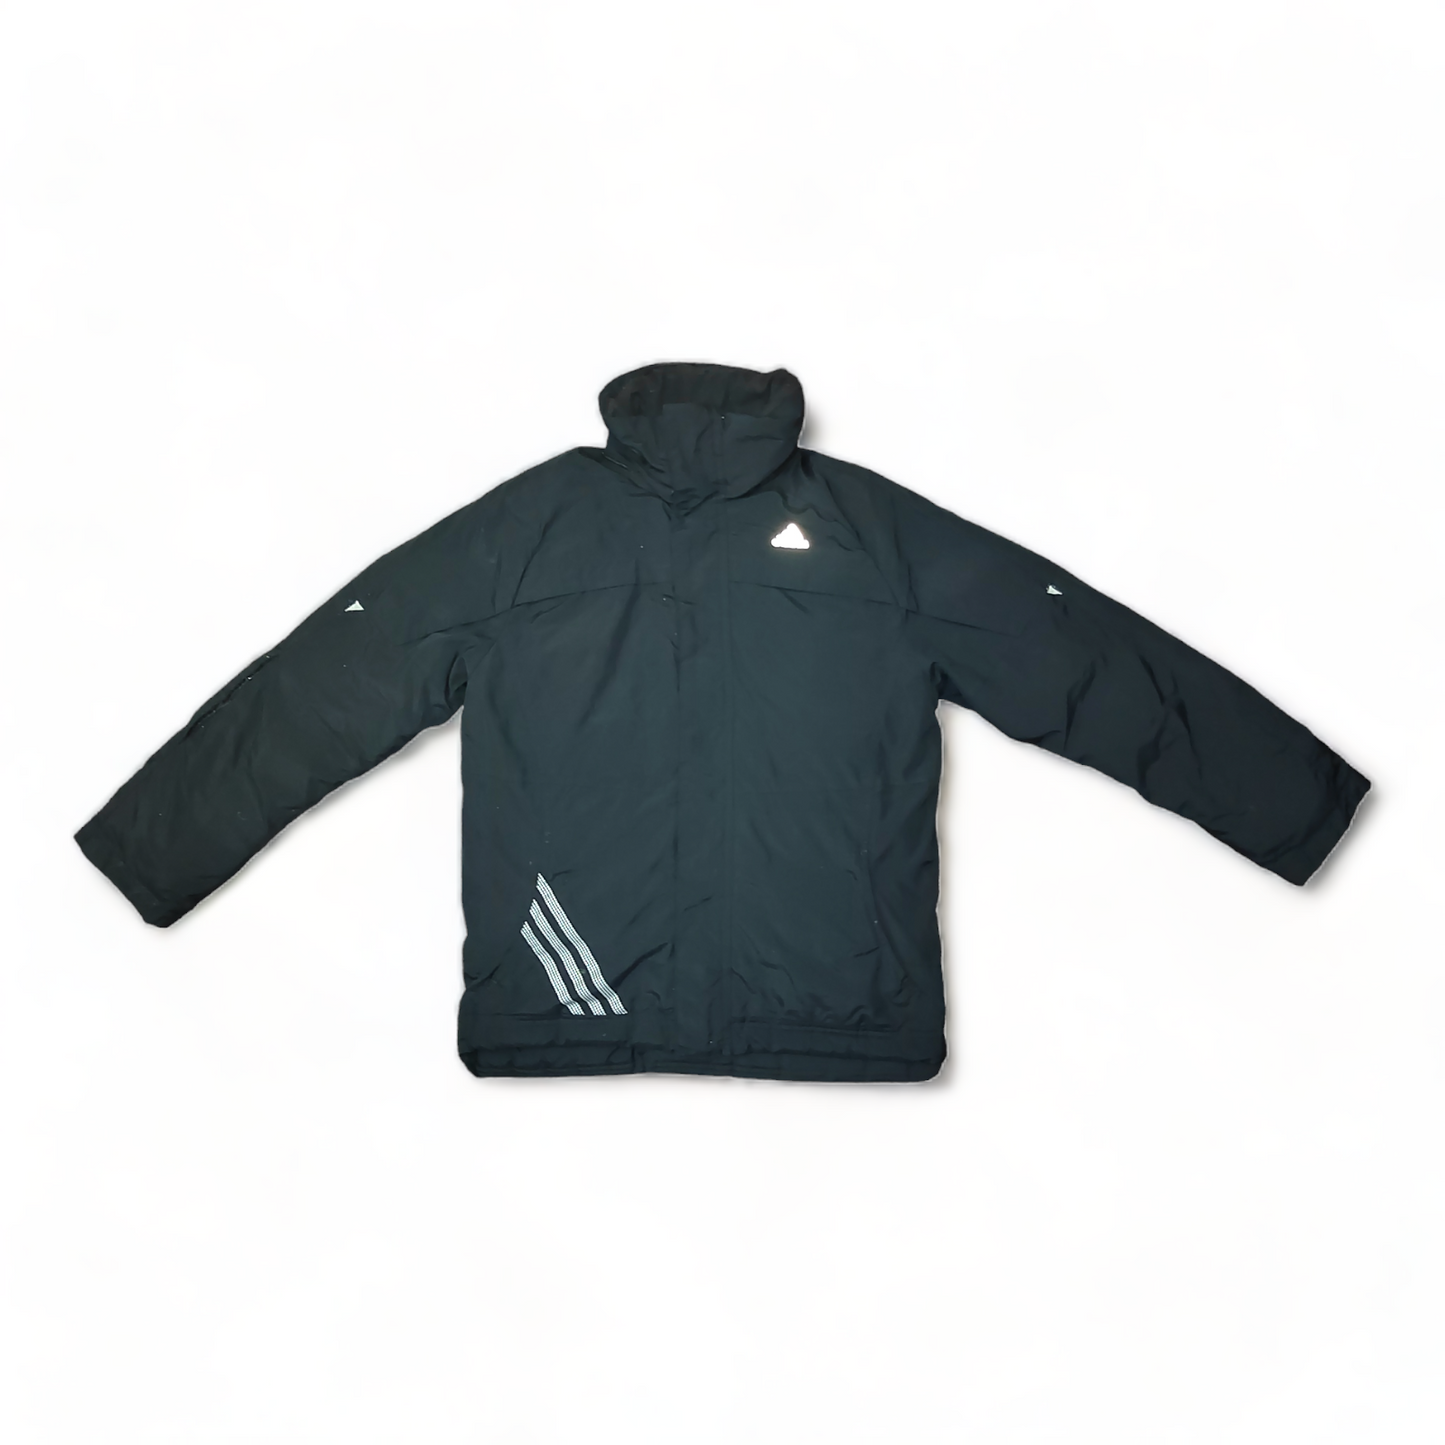 Adidas Mens Jacket Extra Small – Puffer Jacket - XS